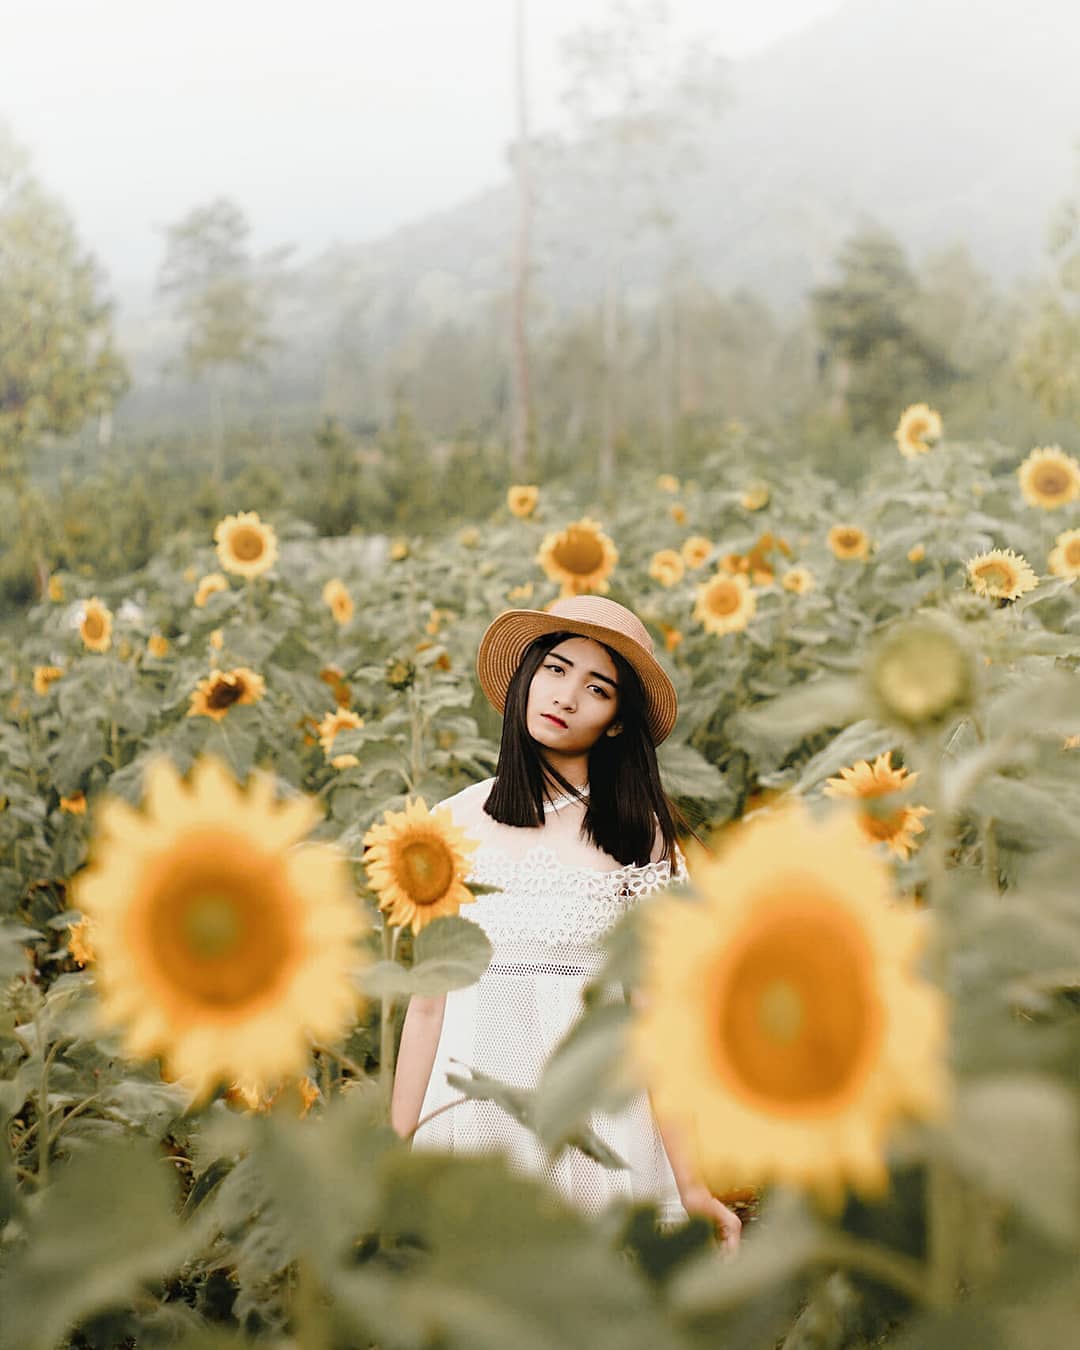 Taman Bunga Matahari, Kota Batu, Malang Raya, Dolan Dolen, Dolaners Taman Bunga Matahari by royfatkhur - Dolan Dolen